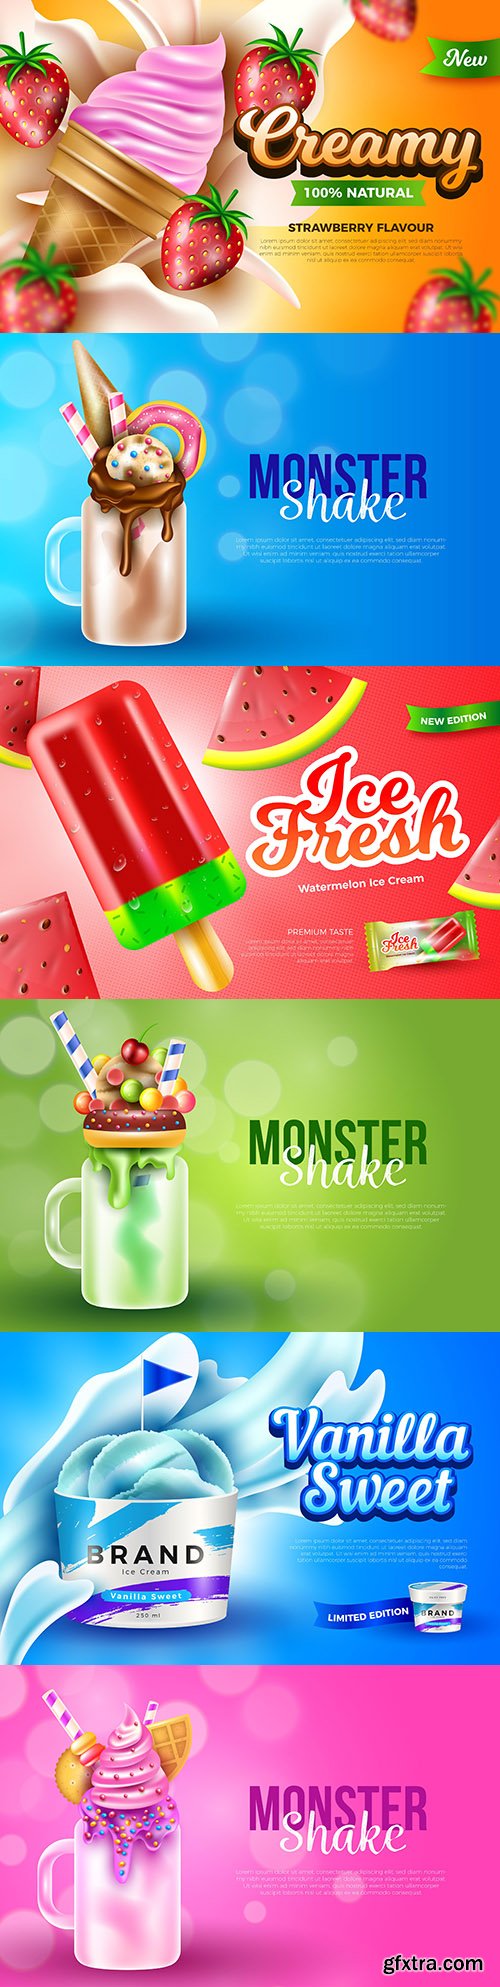 Ice cream and monster shake poster advertising design